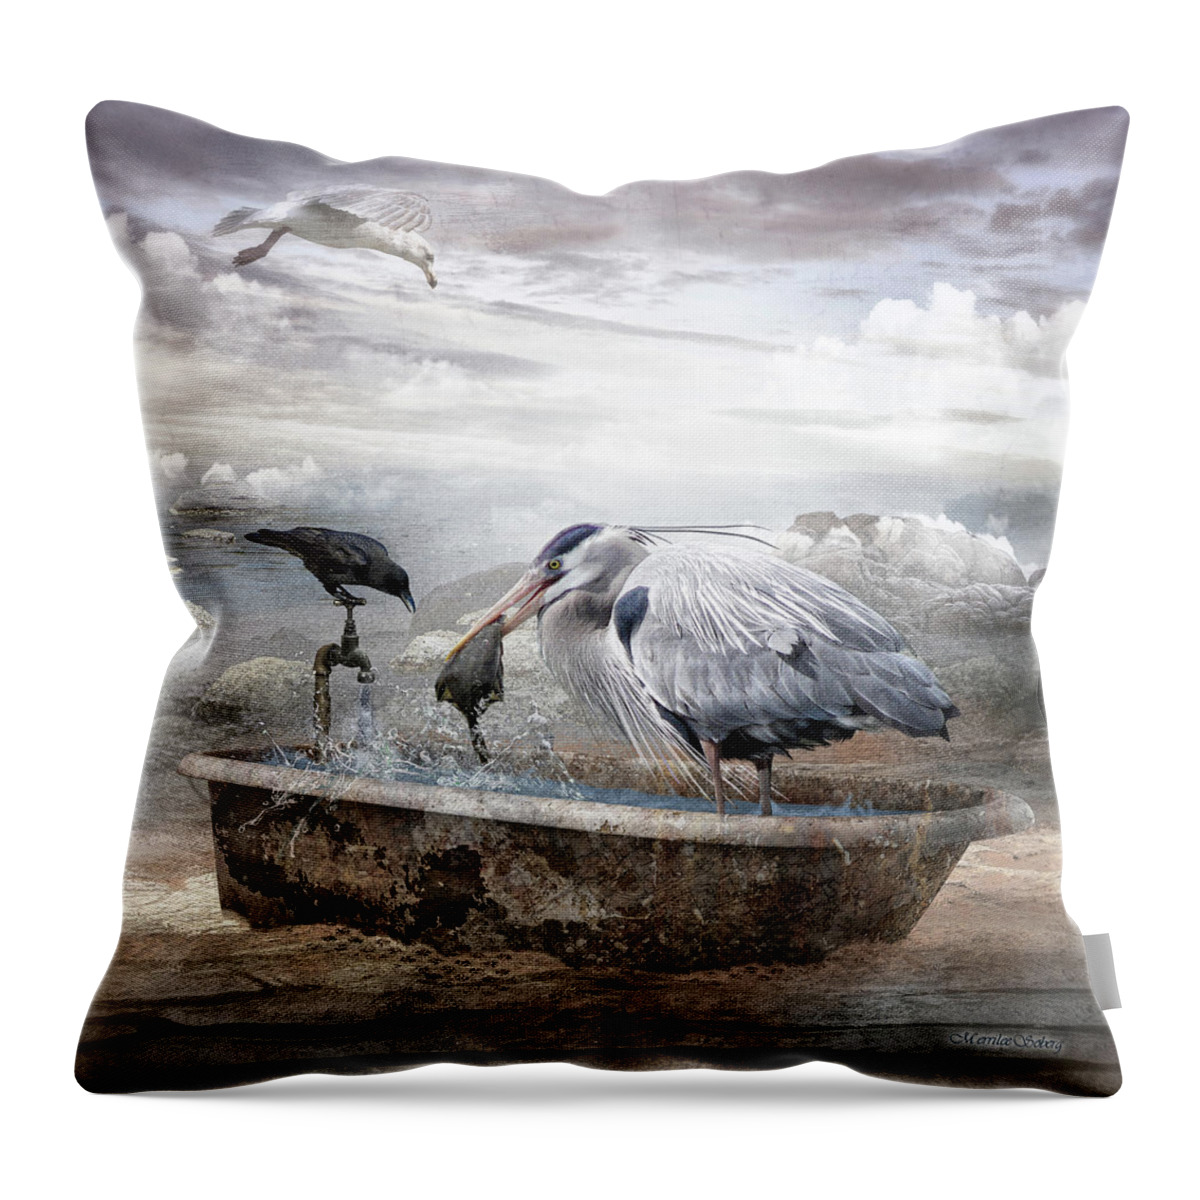 Bird Throw Pillow featuring the digital art Fishing Hole by Merrilee Soberg